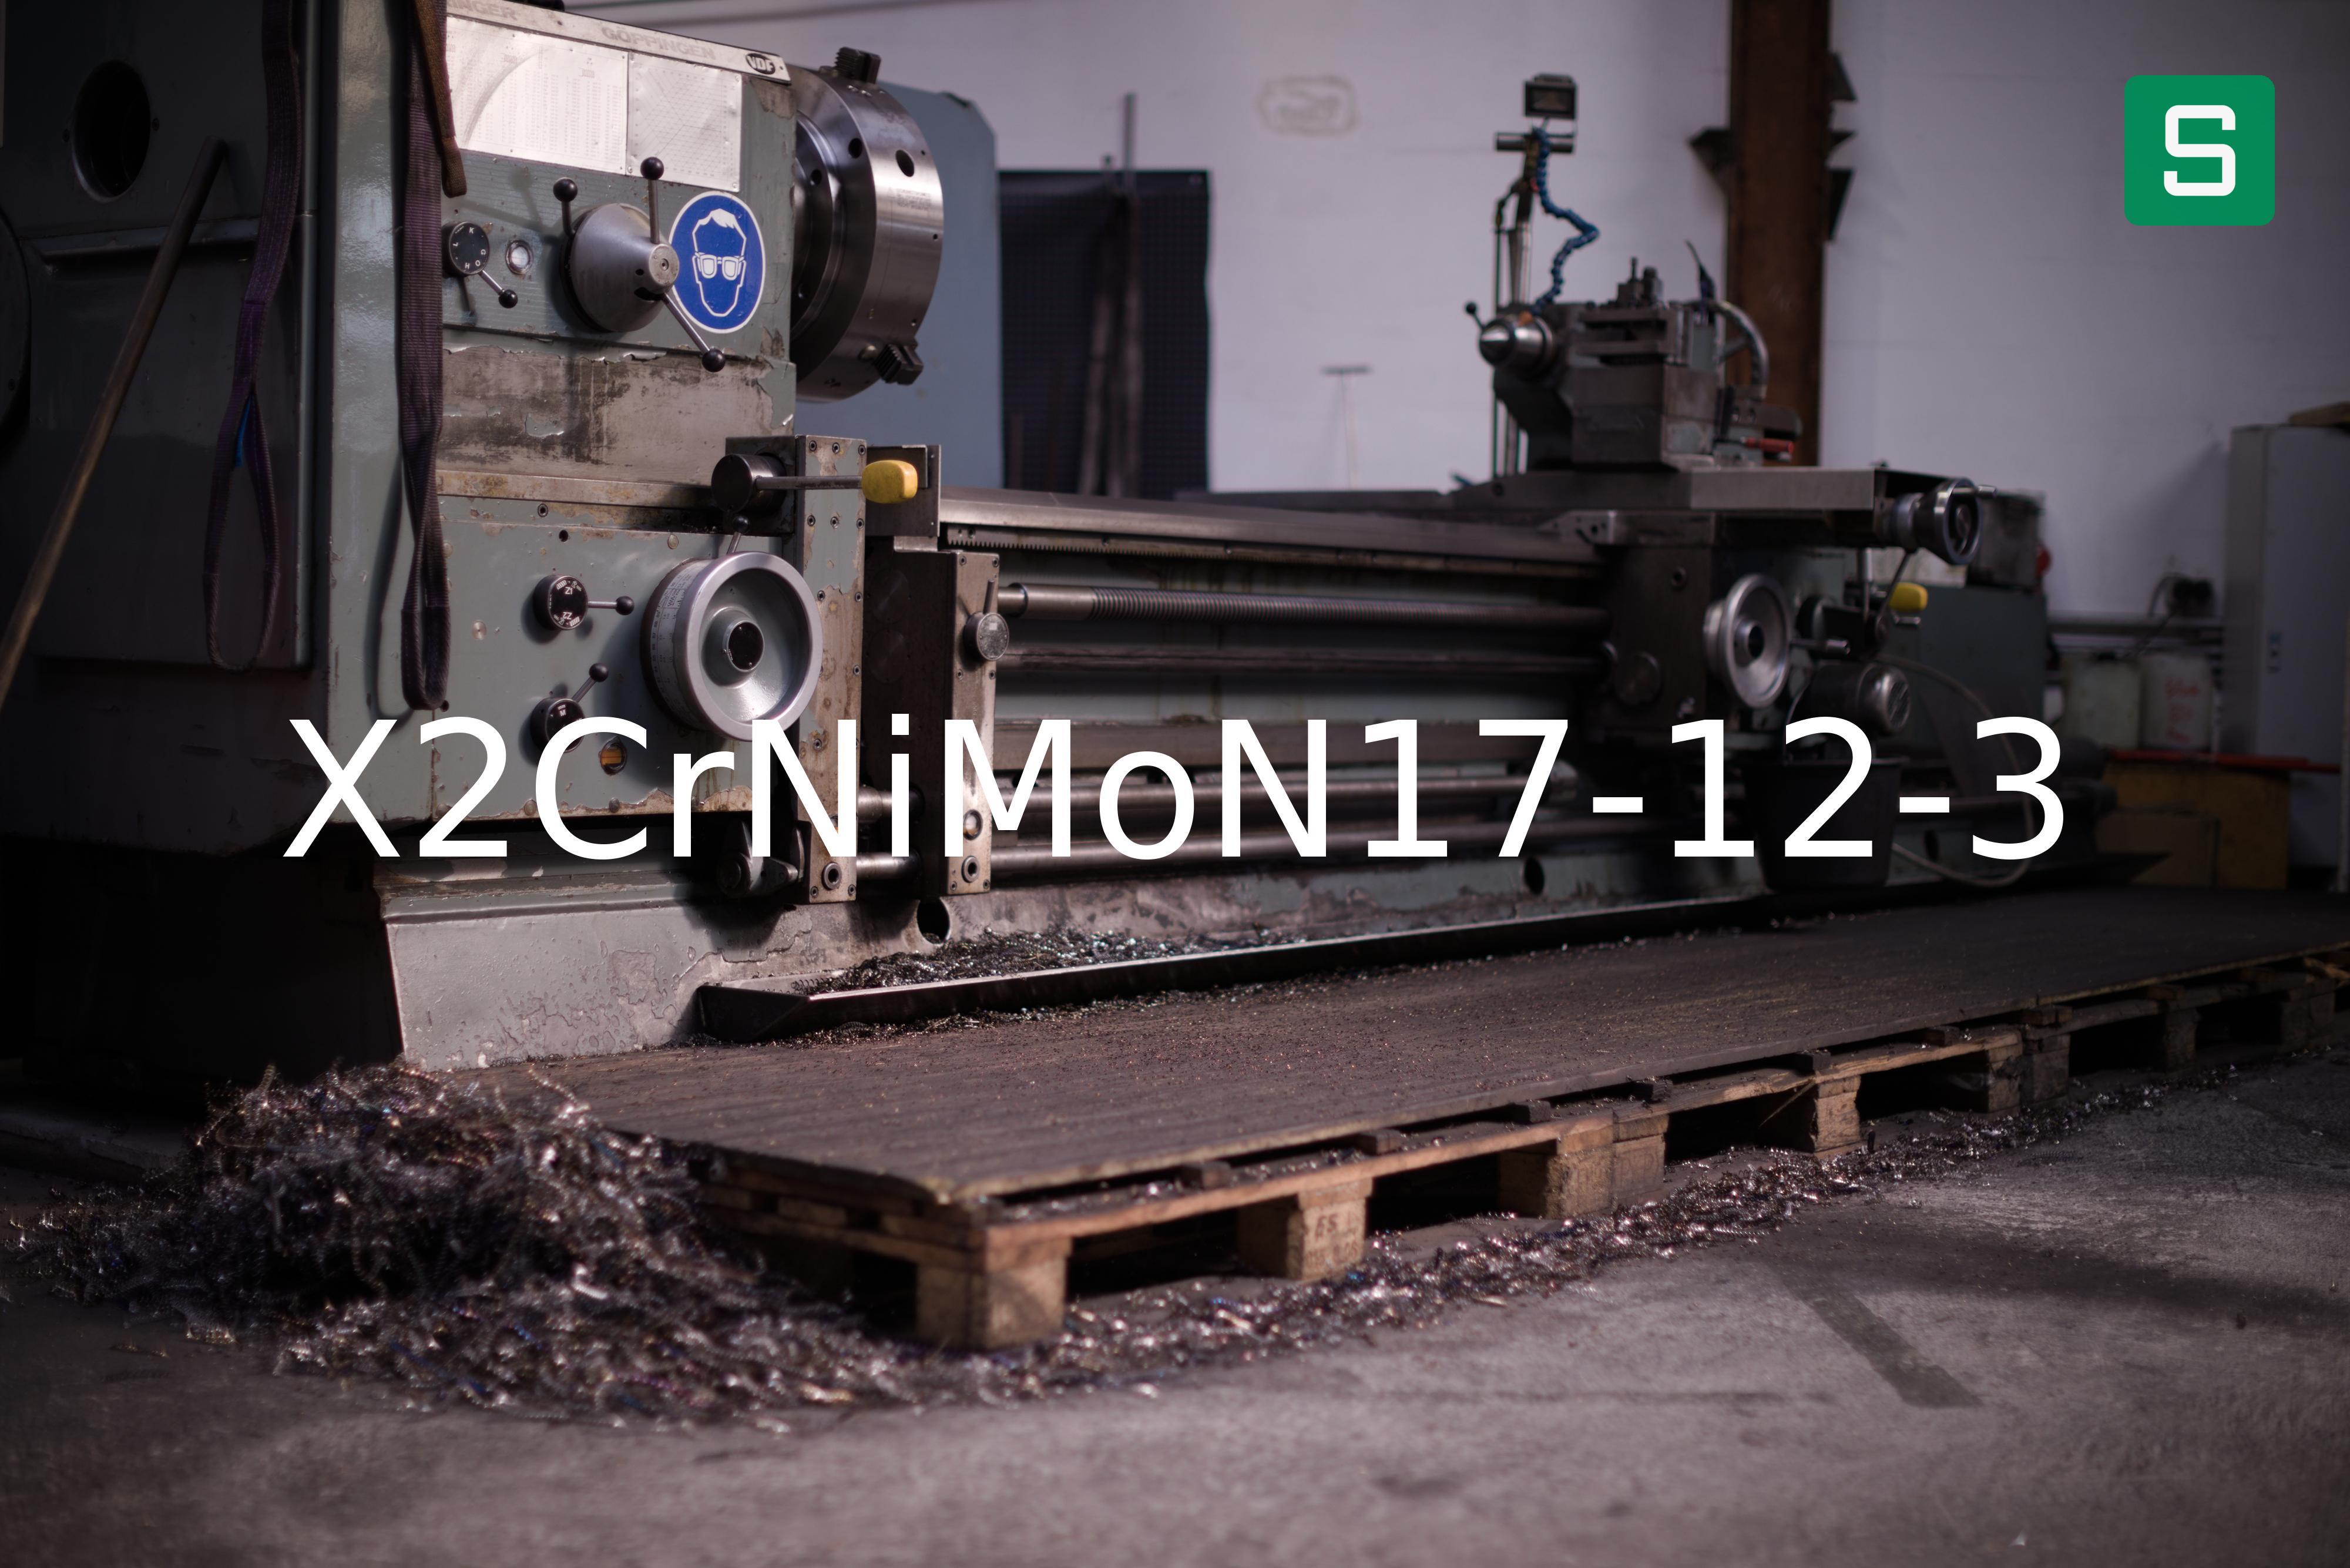 Steel Material: X2CrNiMoN17-12-3